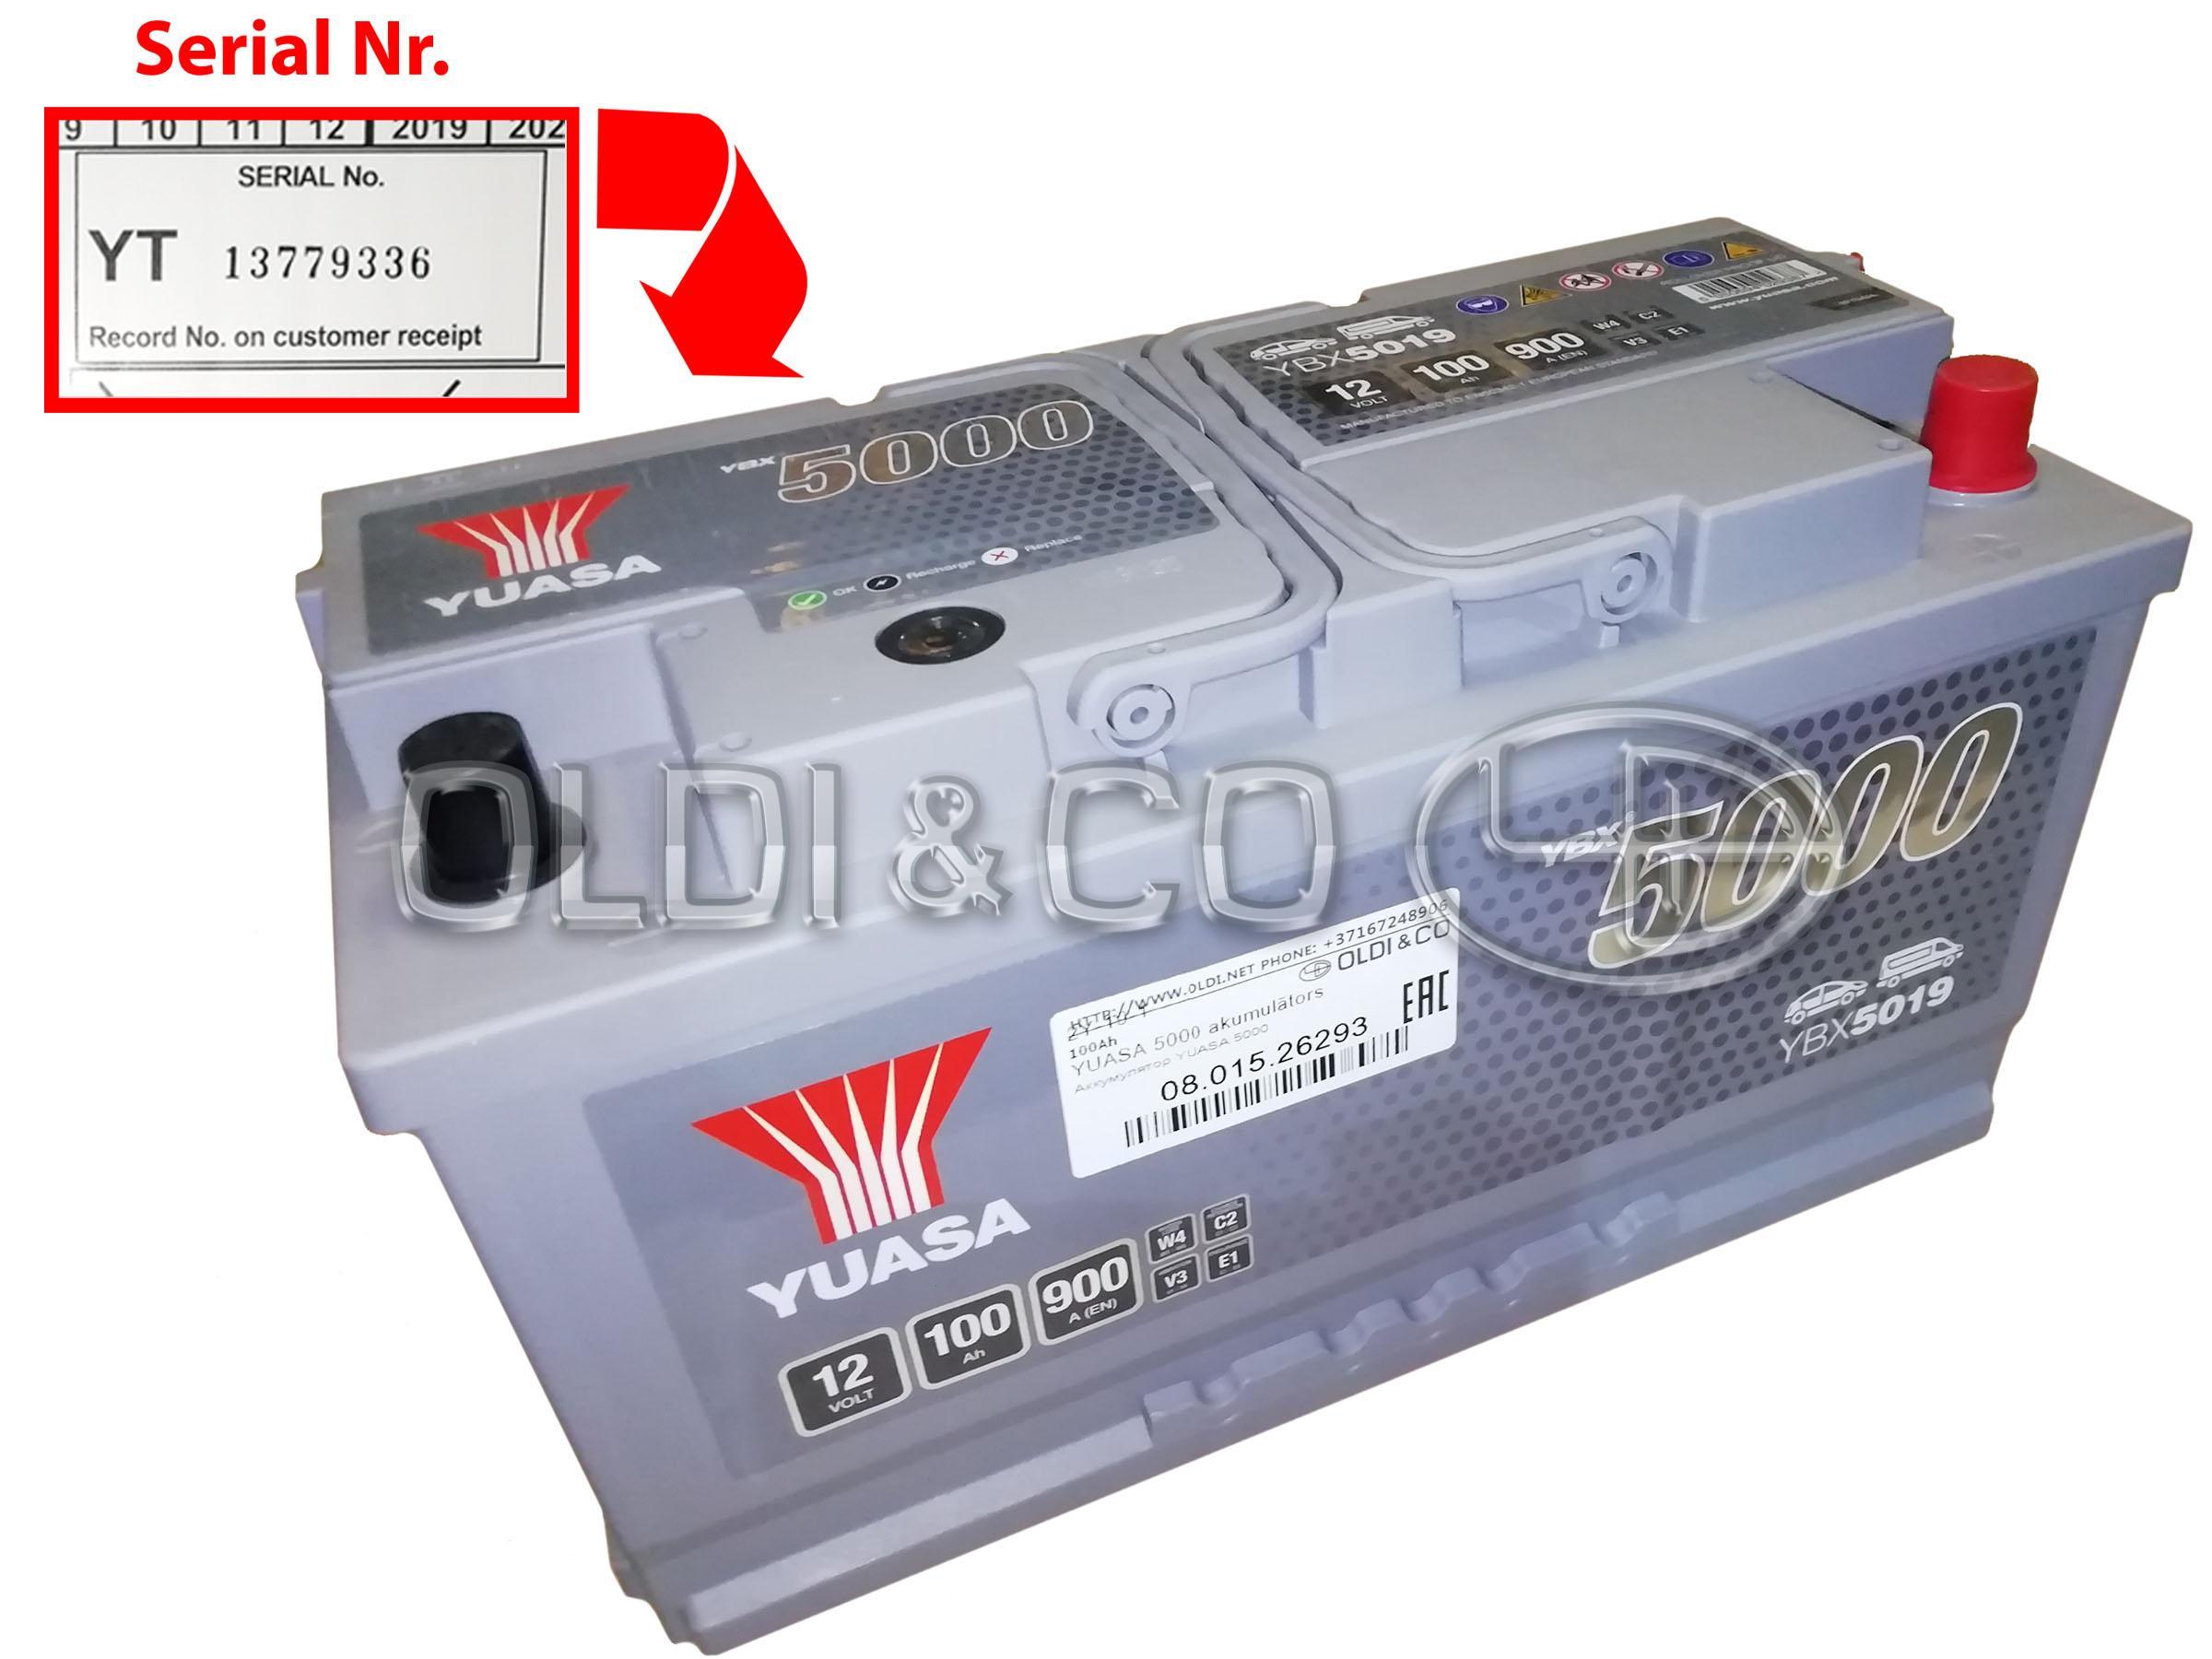 08.015.26293 Batteries → YUASA 5000 battery